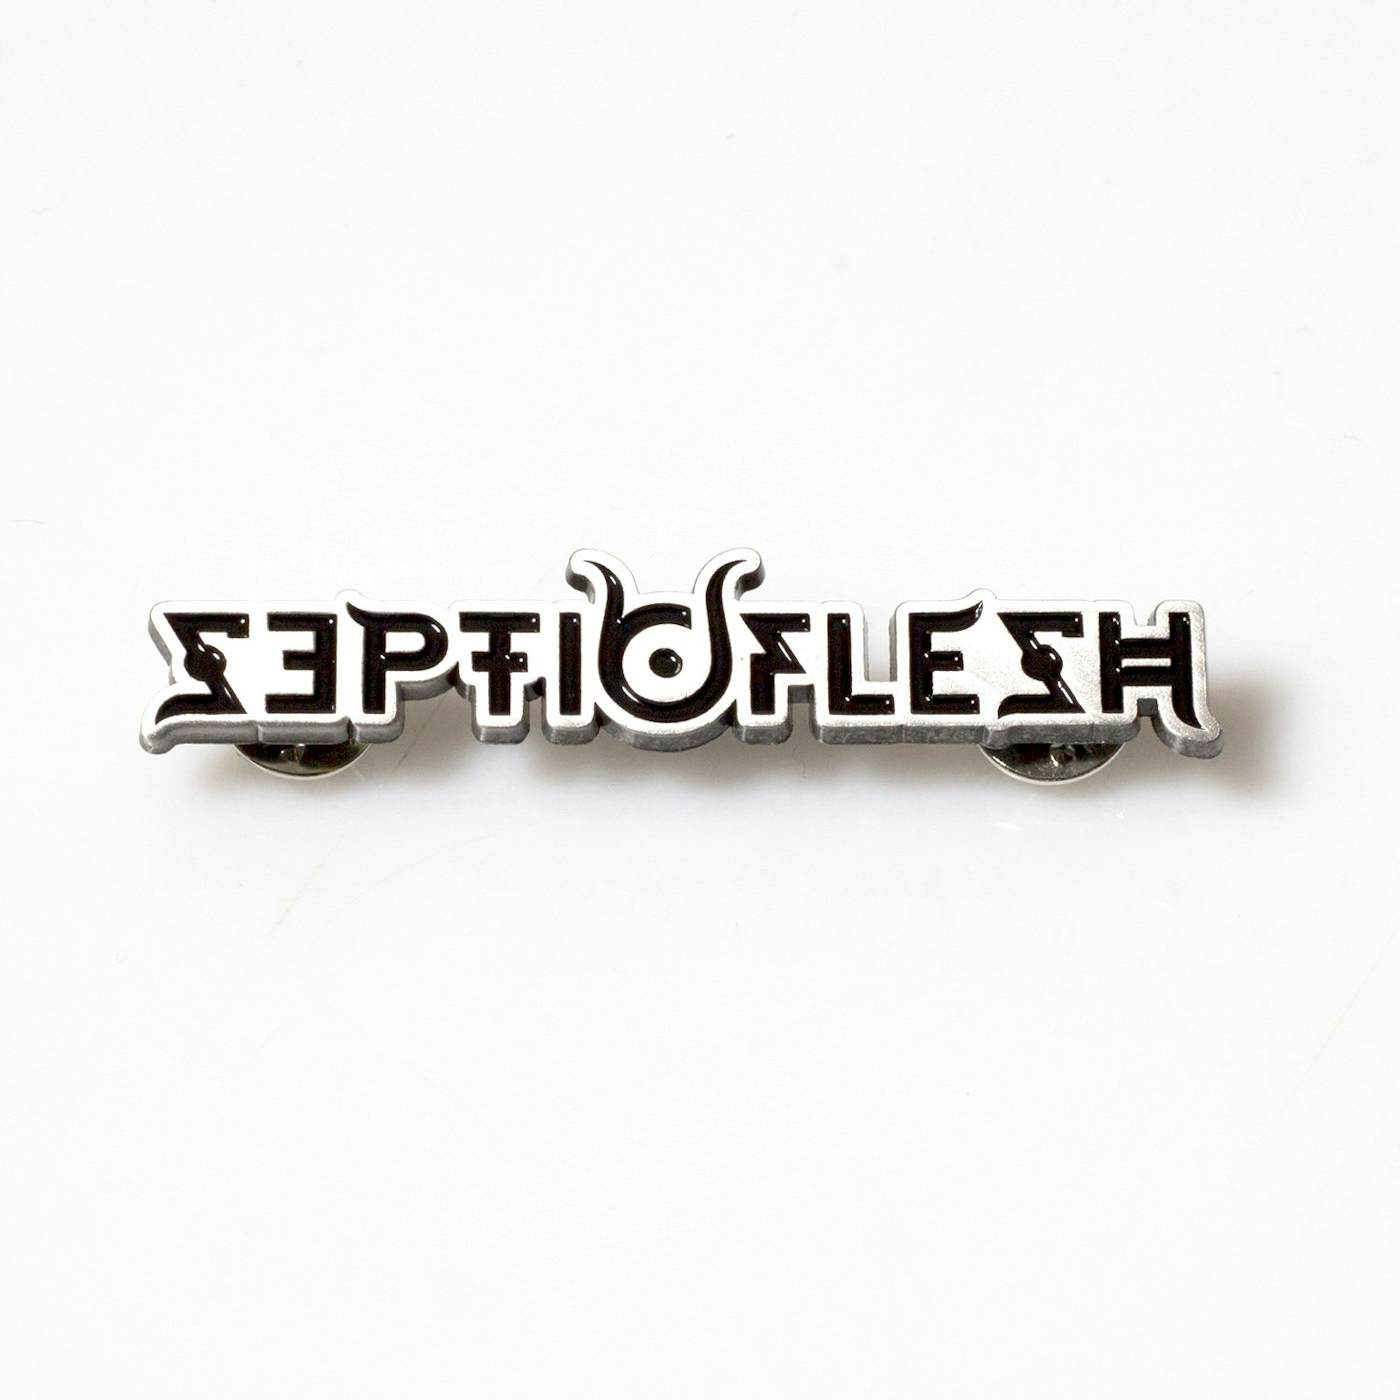 Septicflesh "Logo" Pins